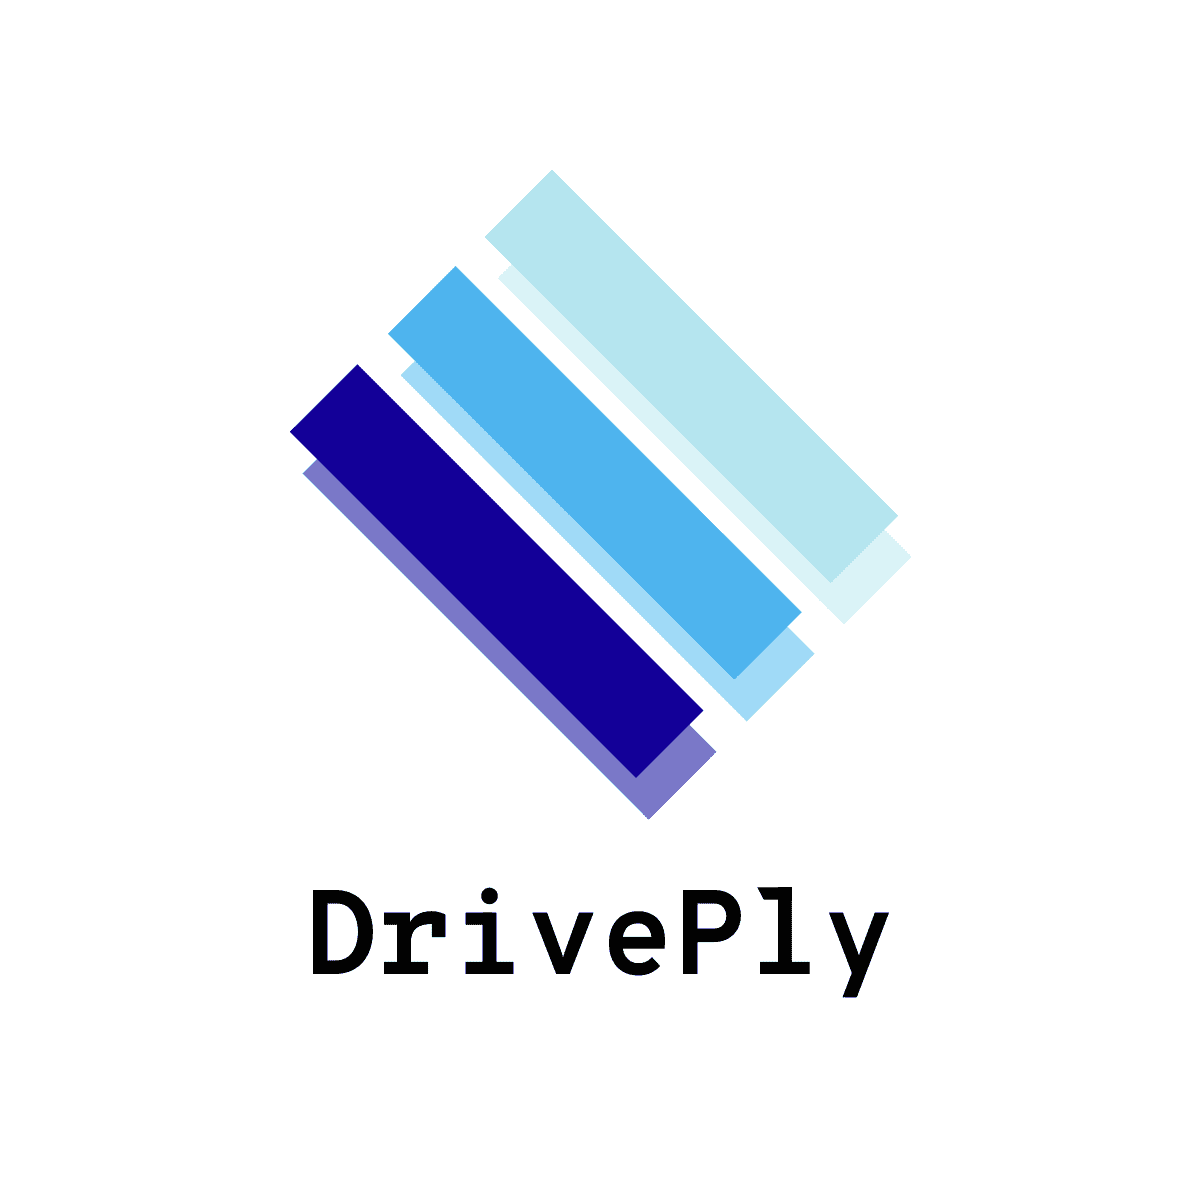 DrivePly